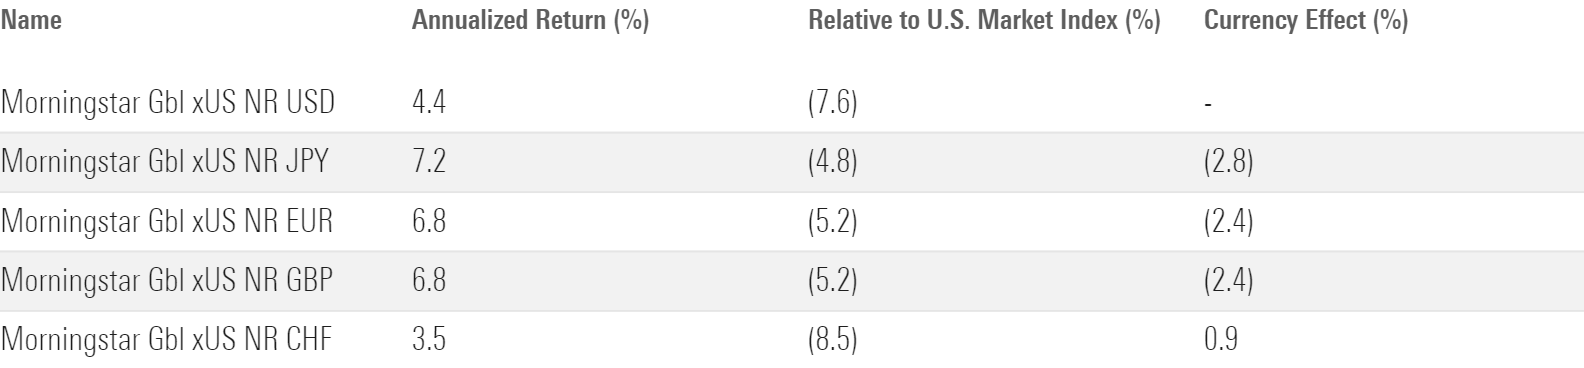 Global Ex-U.S. Index Returns in Different Currencies (2010-22)